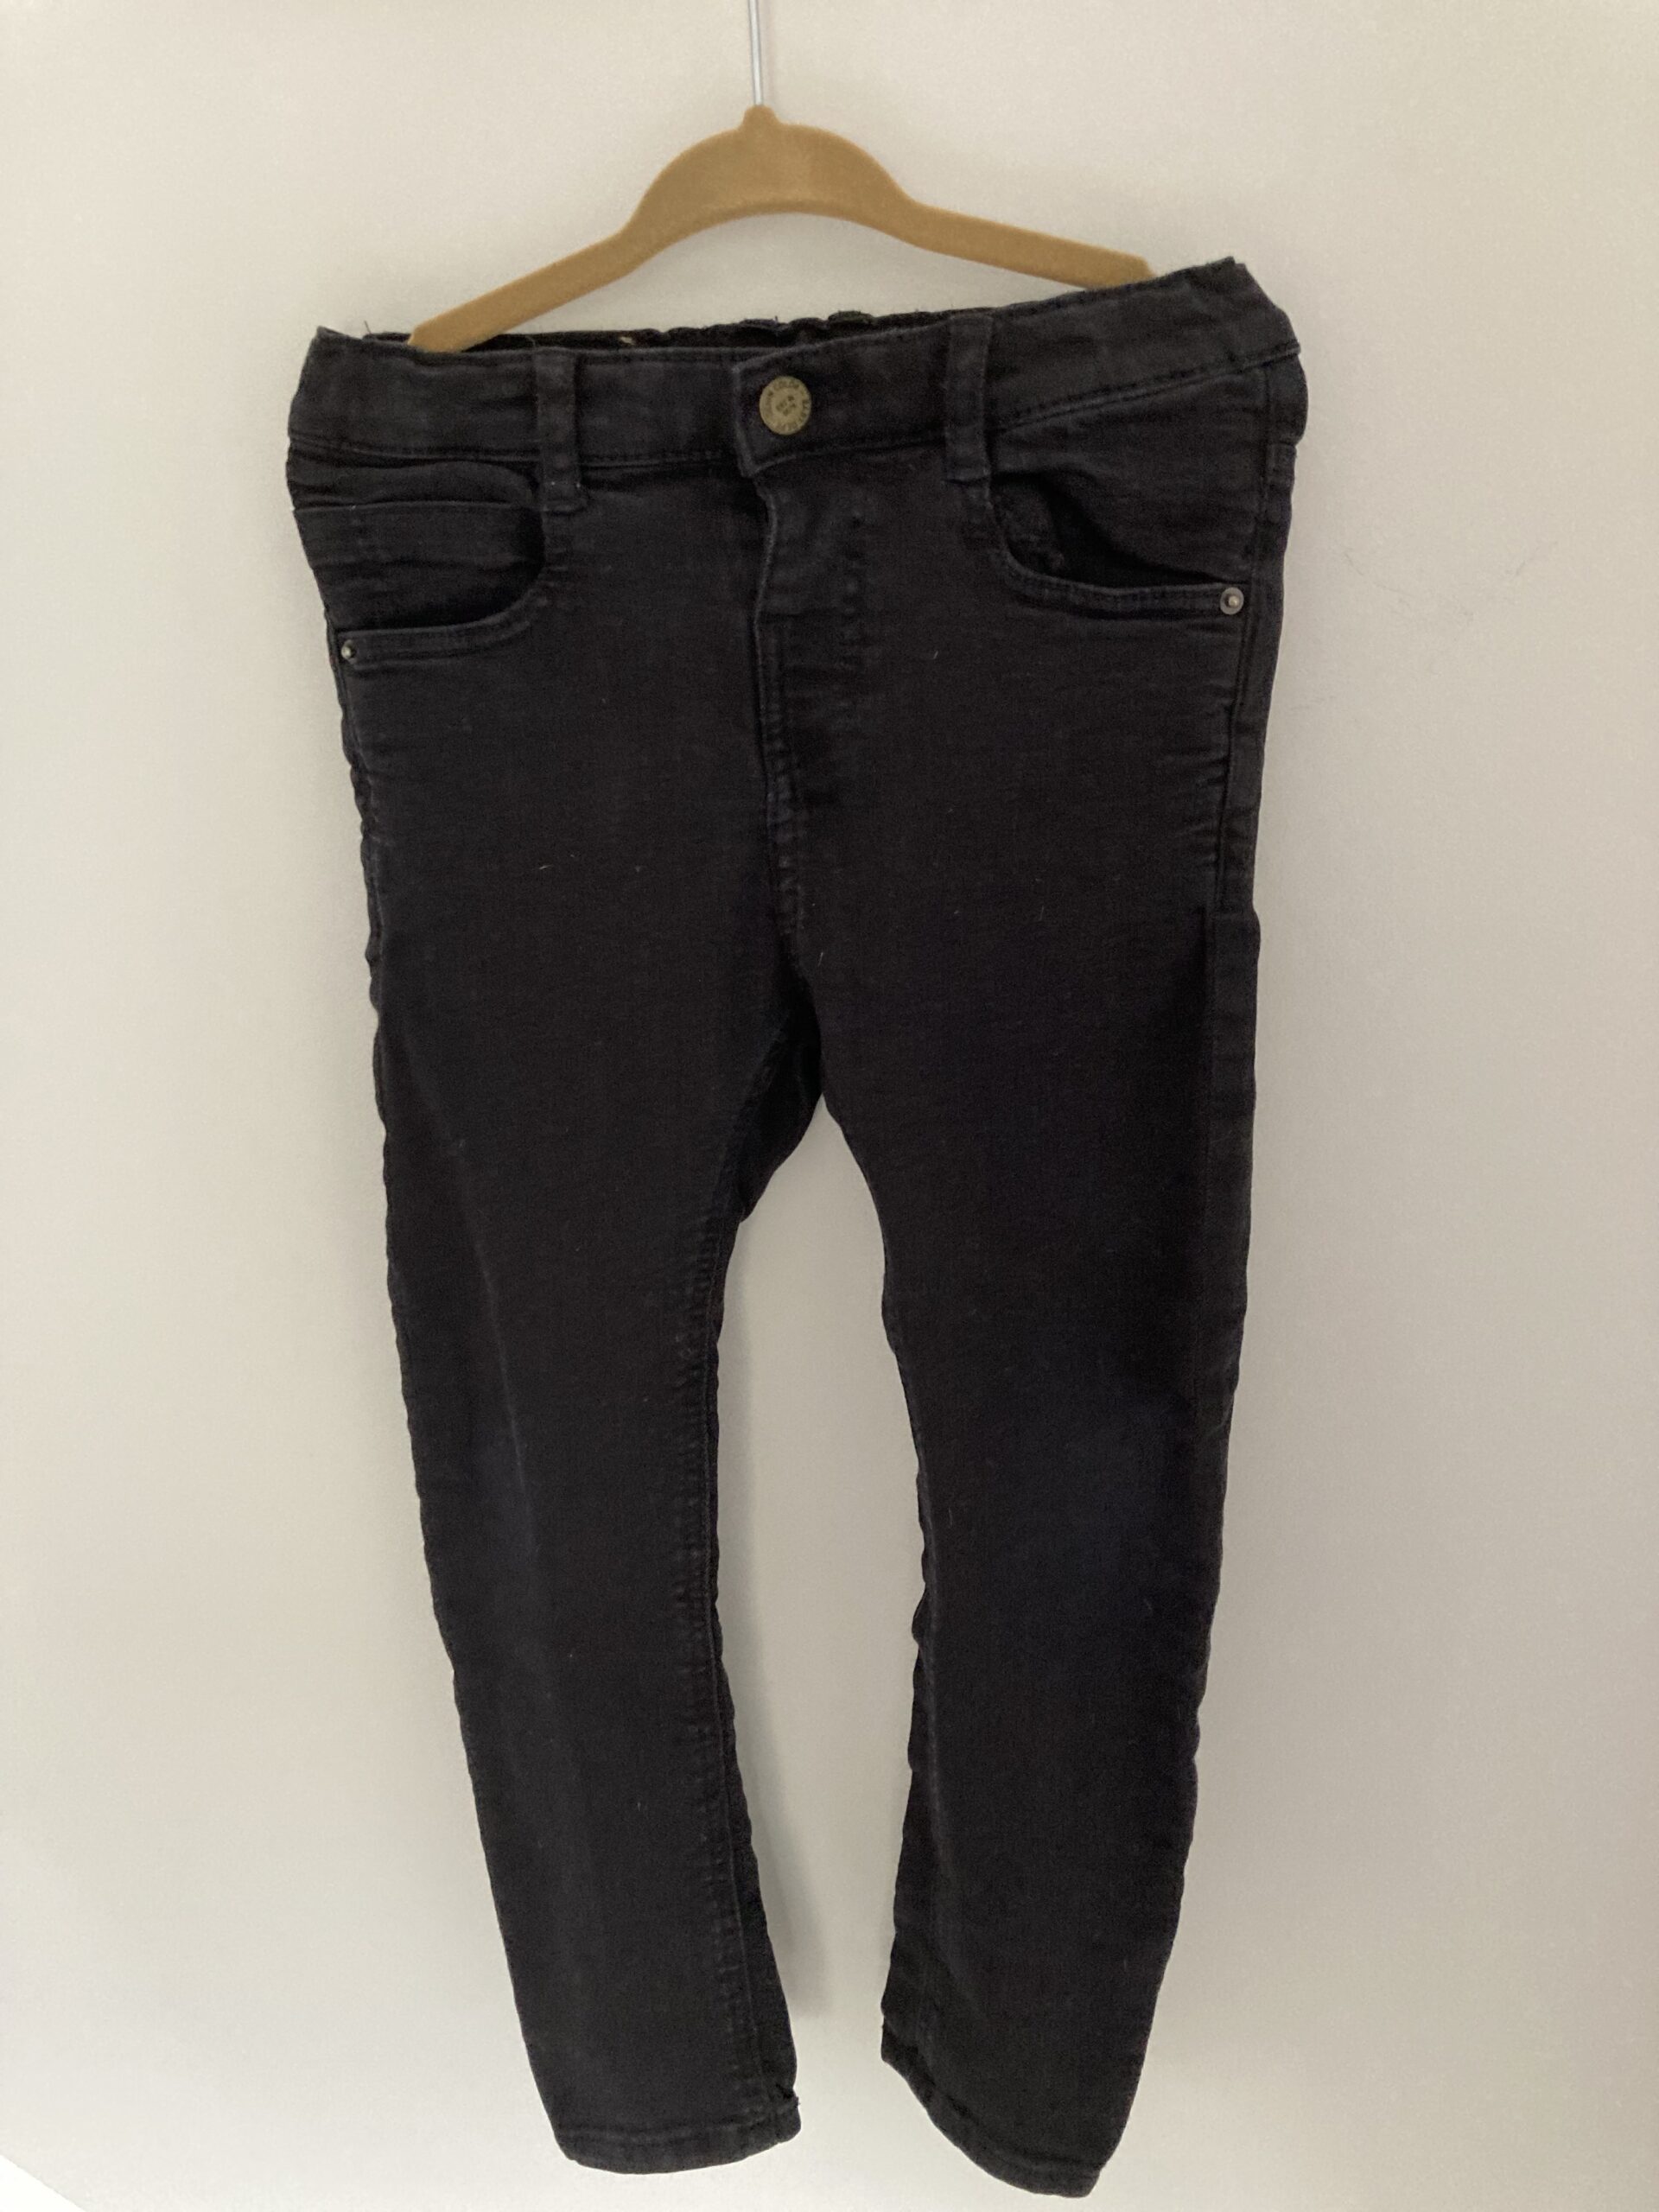 Black ZARA jeans 3-4 years - My Tiny